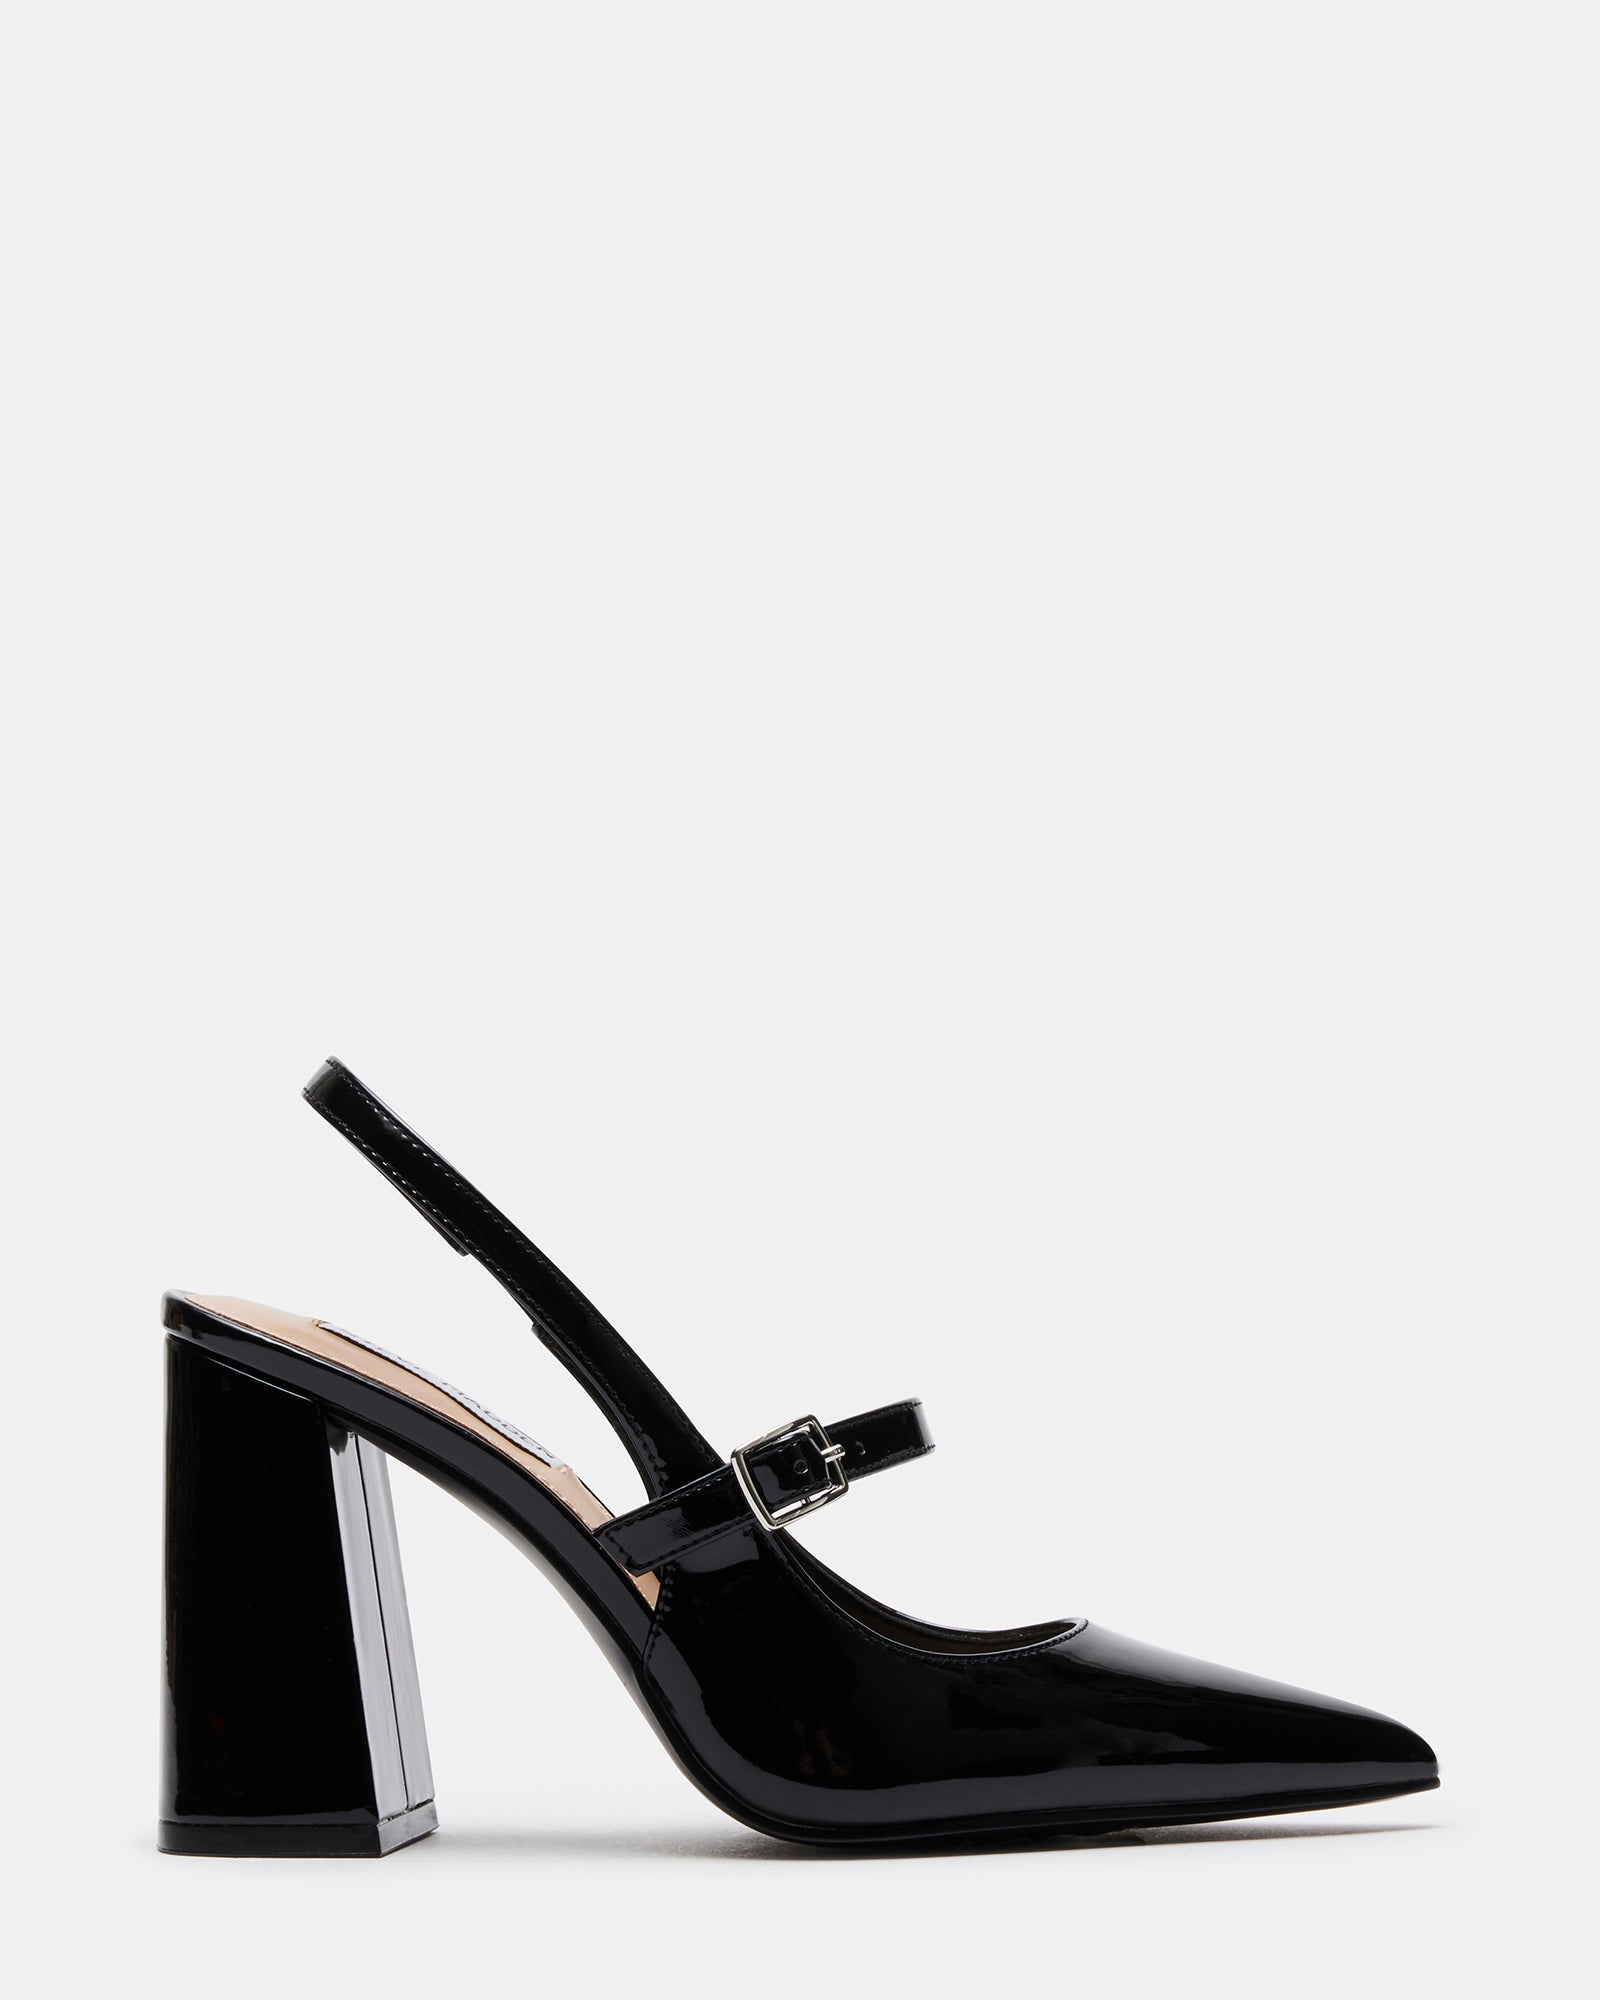 Black Patent Leather Back Strap Open Toe Thin High Heel Pumps Slingback  Fashion Women High Heel